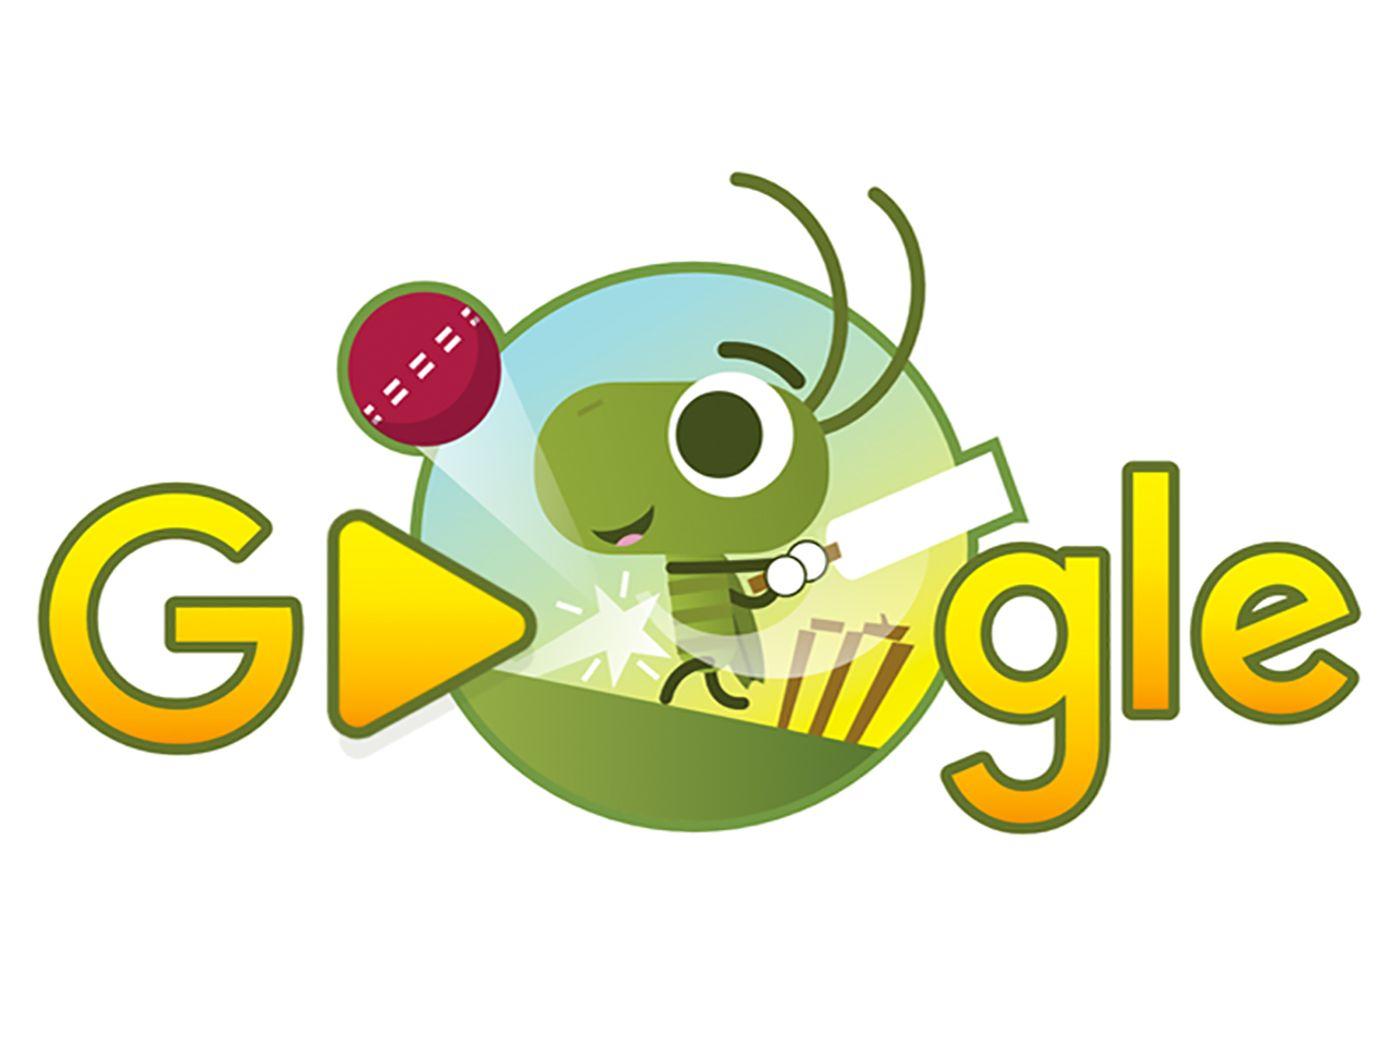 Best Google Logo - Google Doodle Cricket Game Marks ICC Women's World Cup | Time